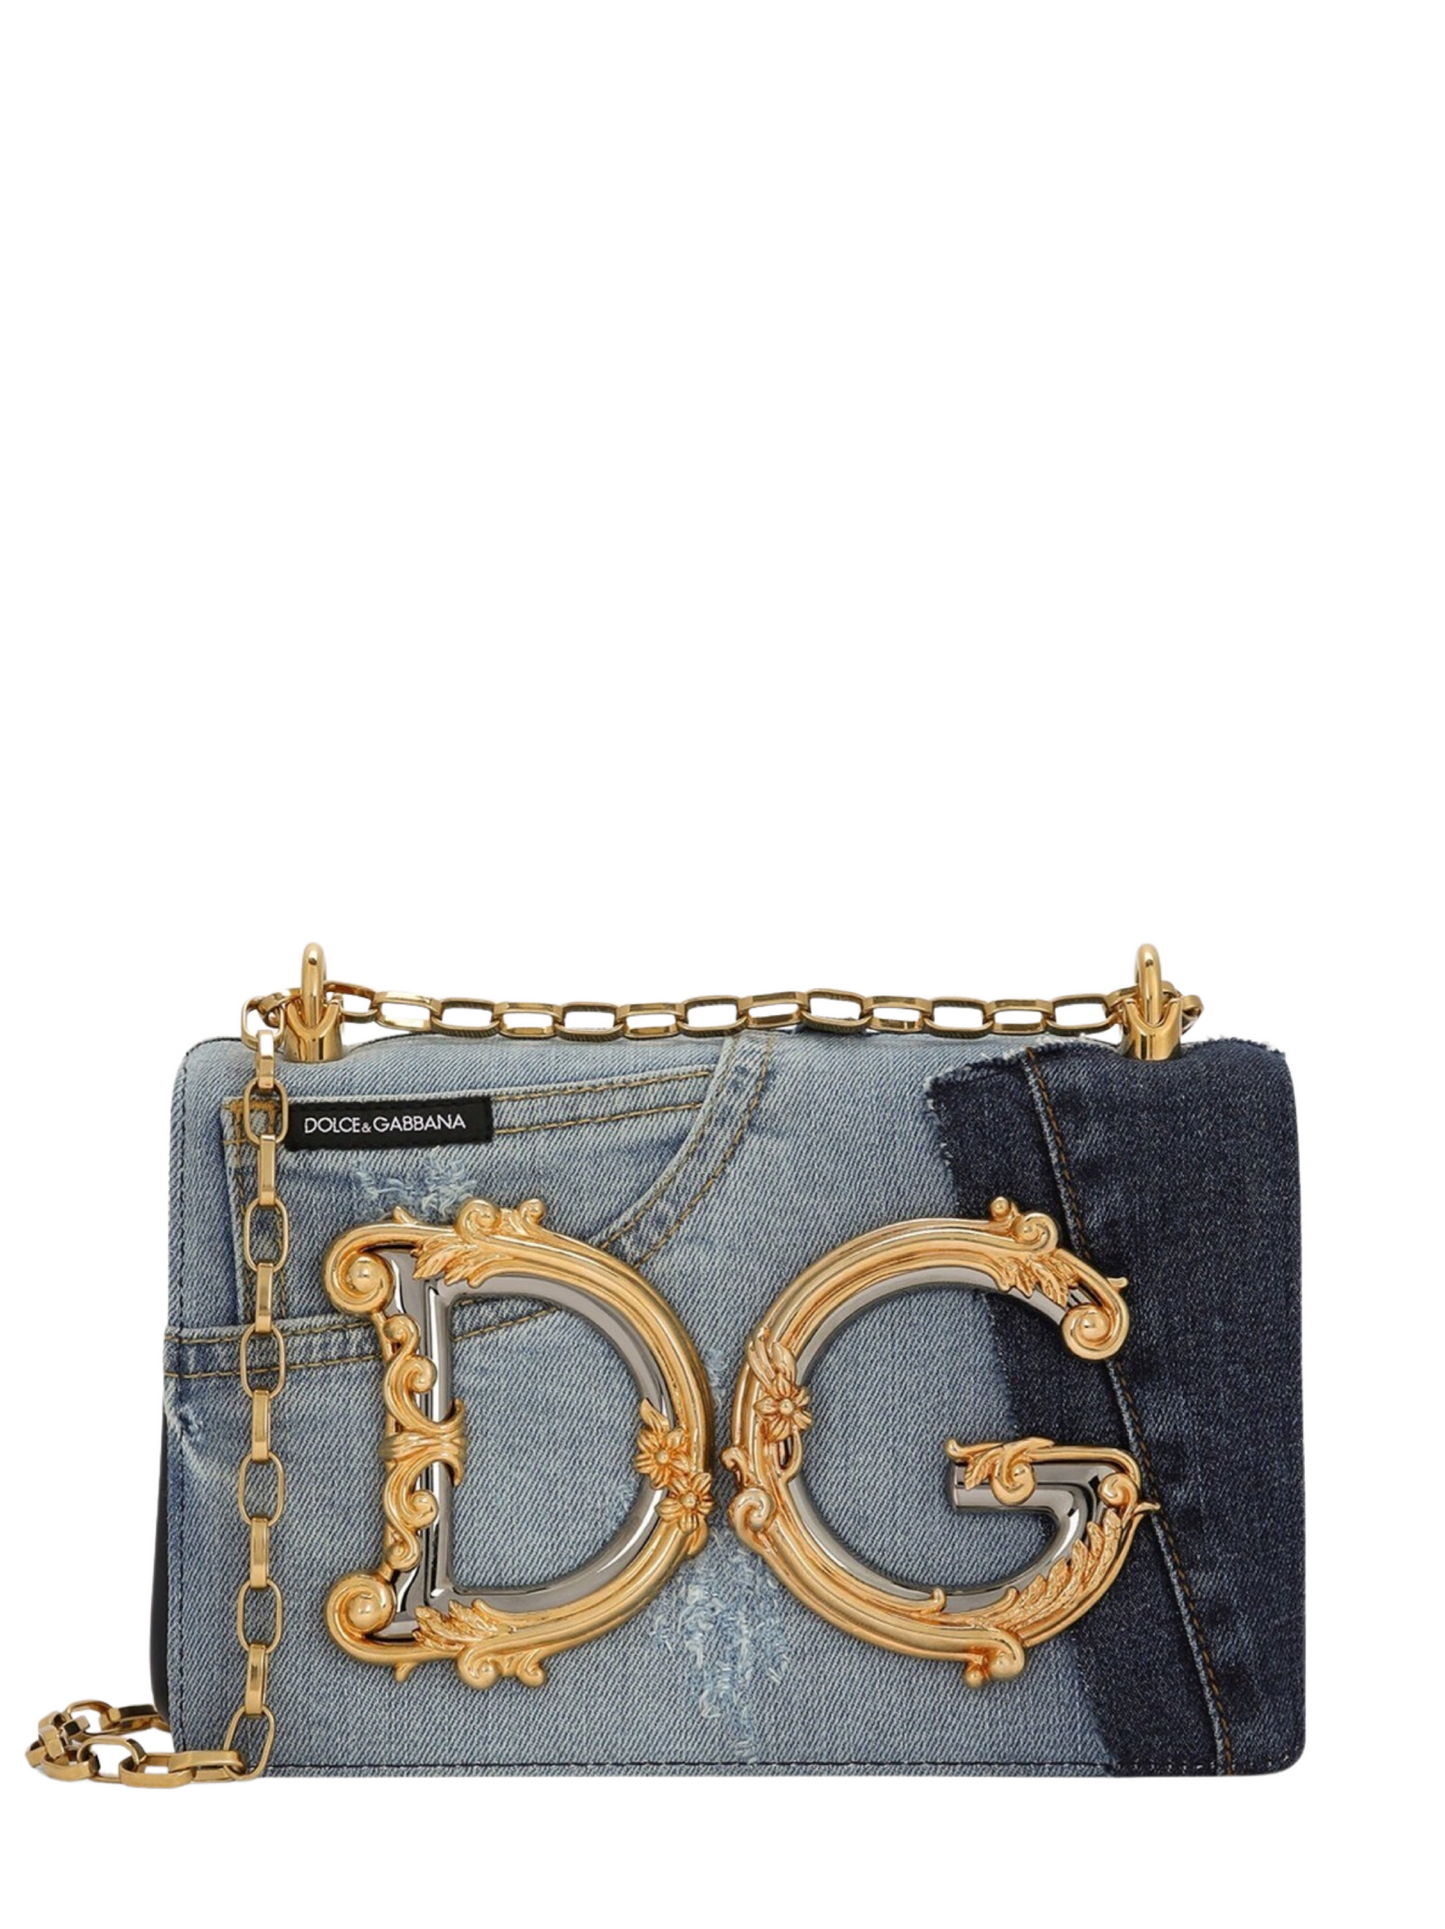 Dolce & Gabbana Girls Bag in Patchwork Denim and Plain Calfskin